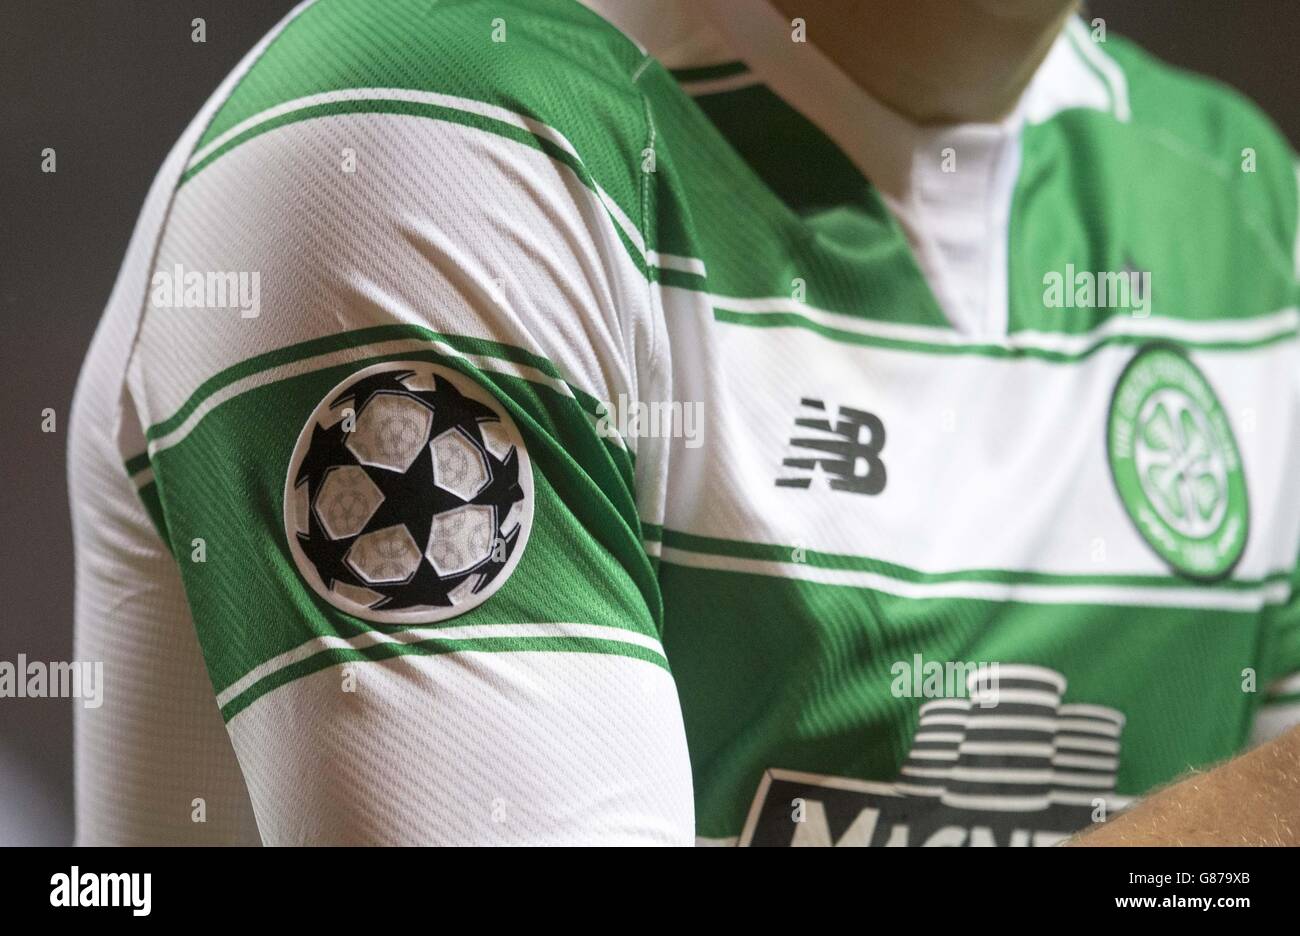 Celtic Away football shirt 2009 - 2011. Sponsored by Carling